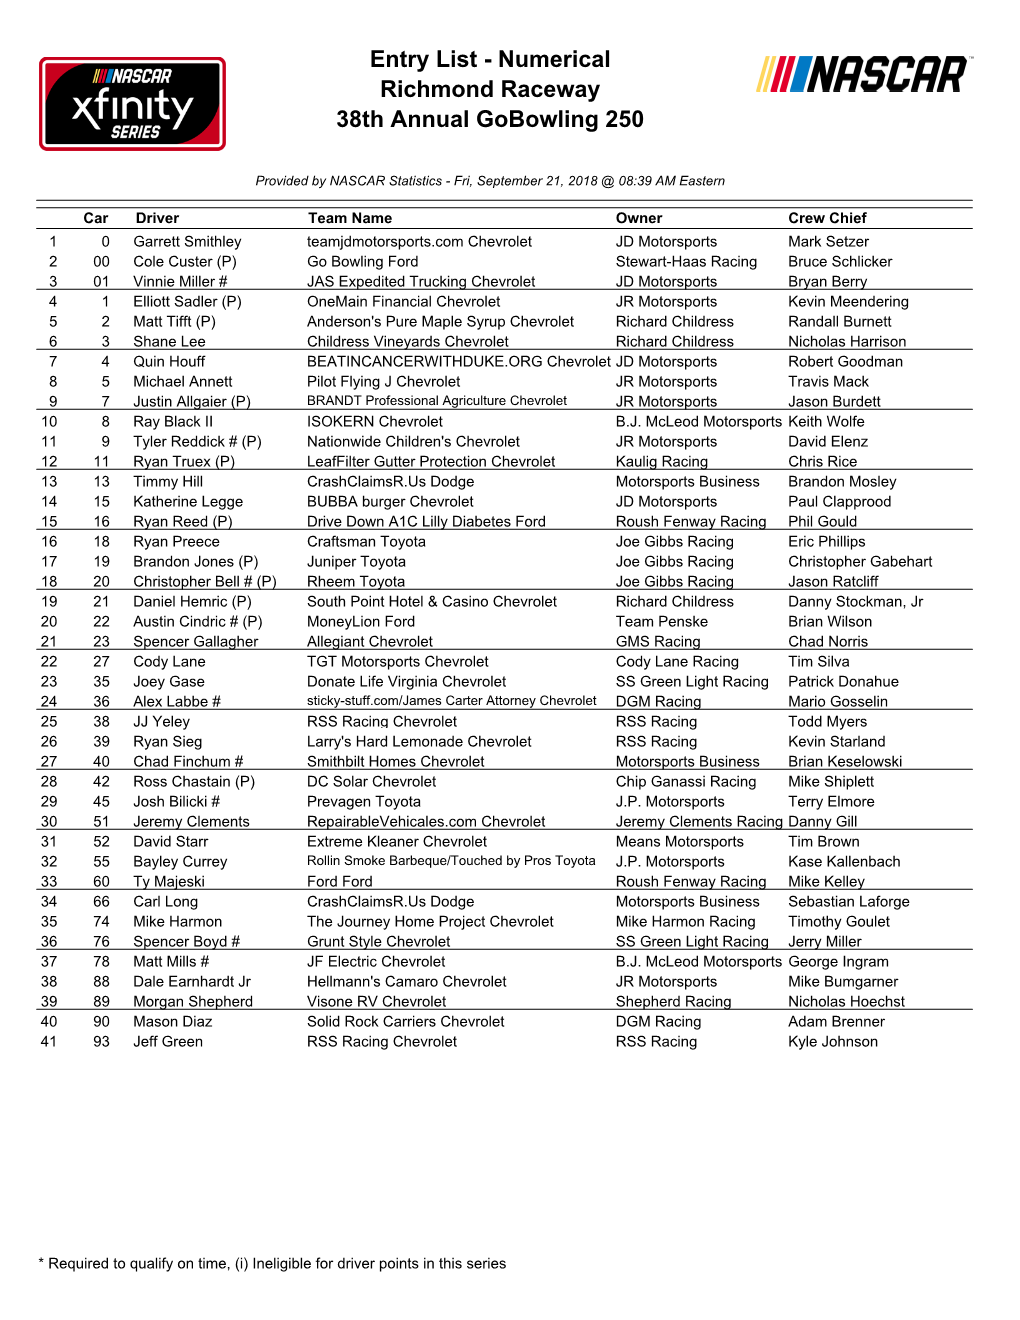 Entry List - Numerical Richmond Raceway 38Th Annual Gobowling 250